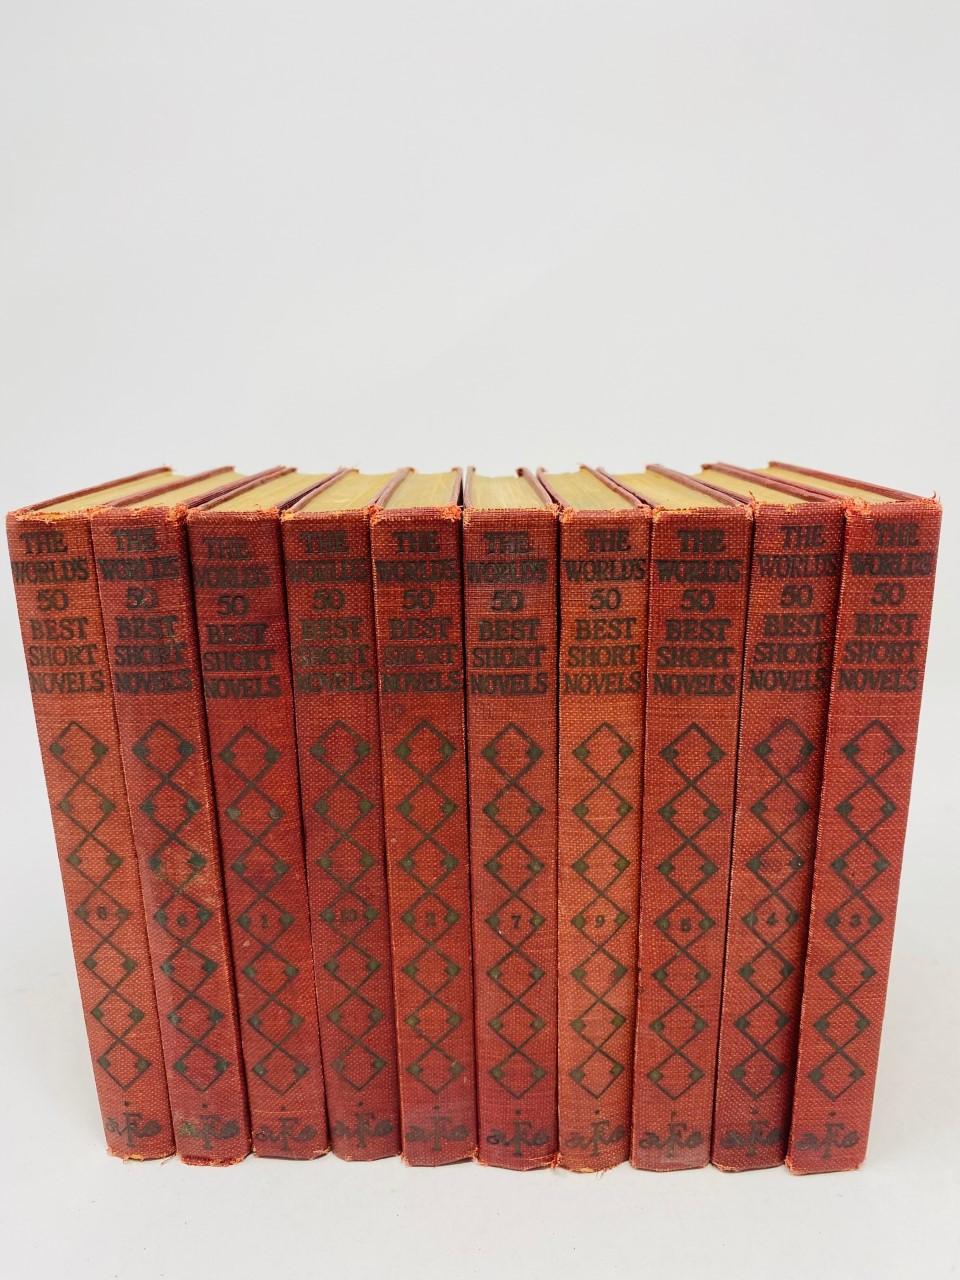 Linen Rare Antique Books Set of 10 The World's 50 Best Short Novels from 1929 For Sale